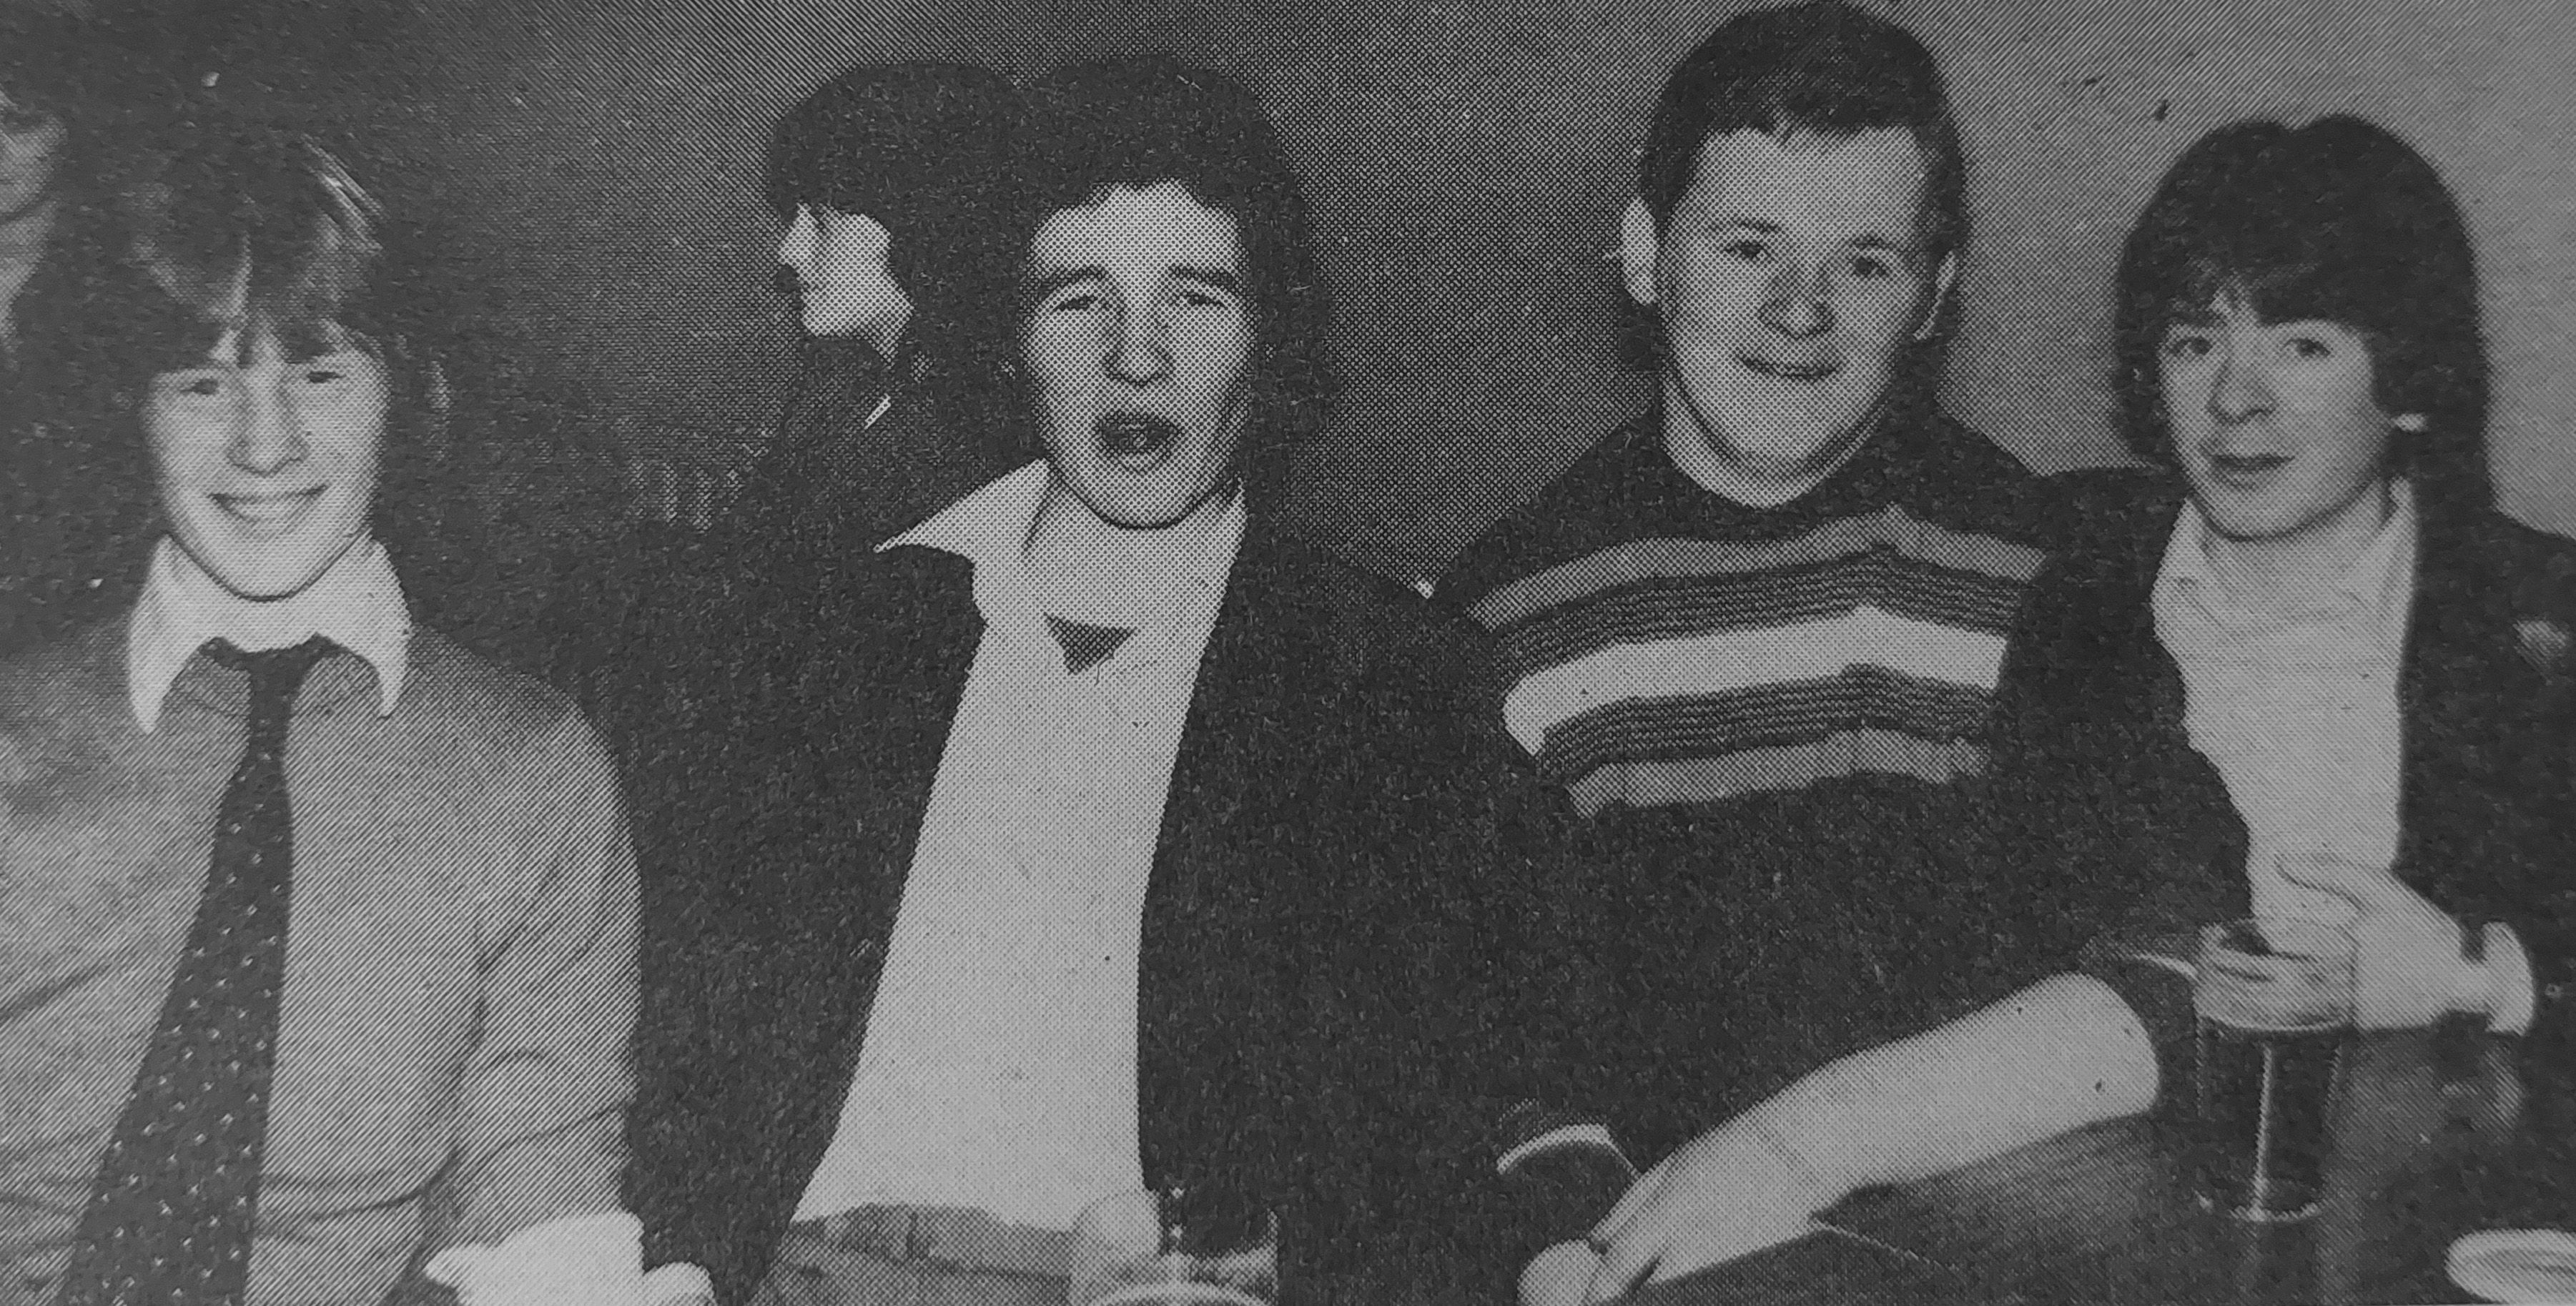 THE LADS: Paddy McGinn, Martin Rouse, Brendan Neeson and Brendan Lees in the Lake Glen back in January 1980